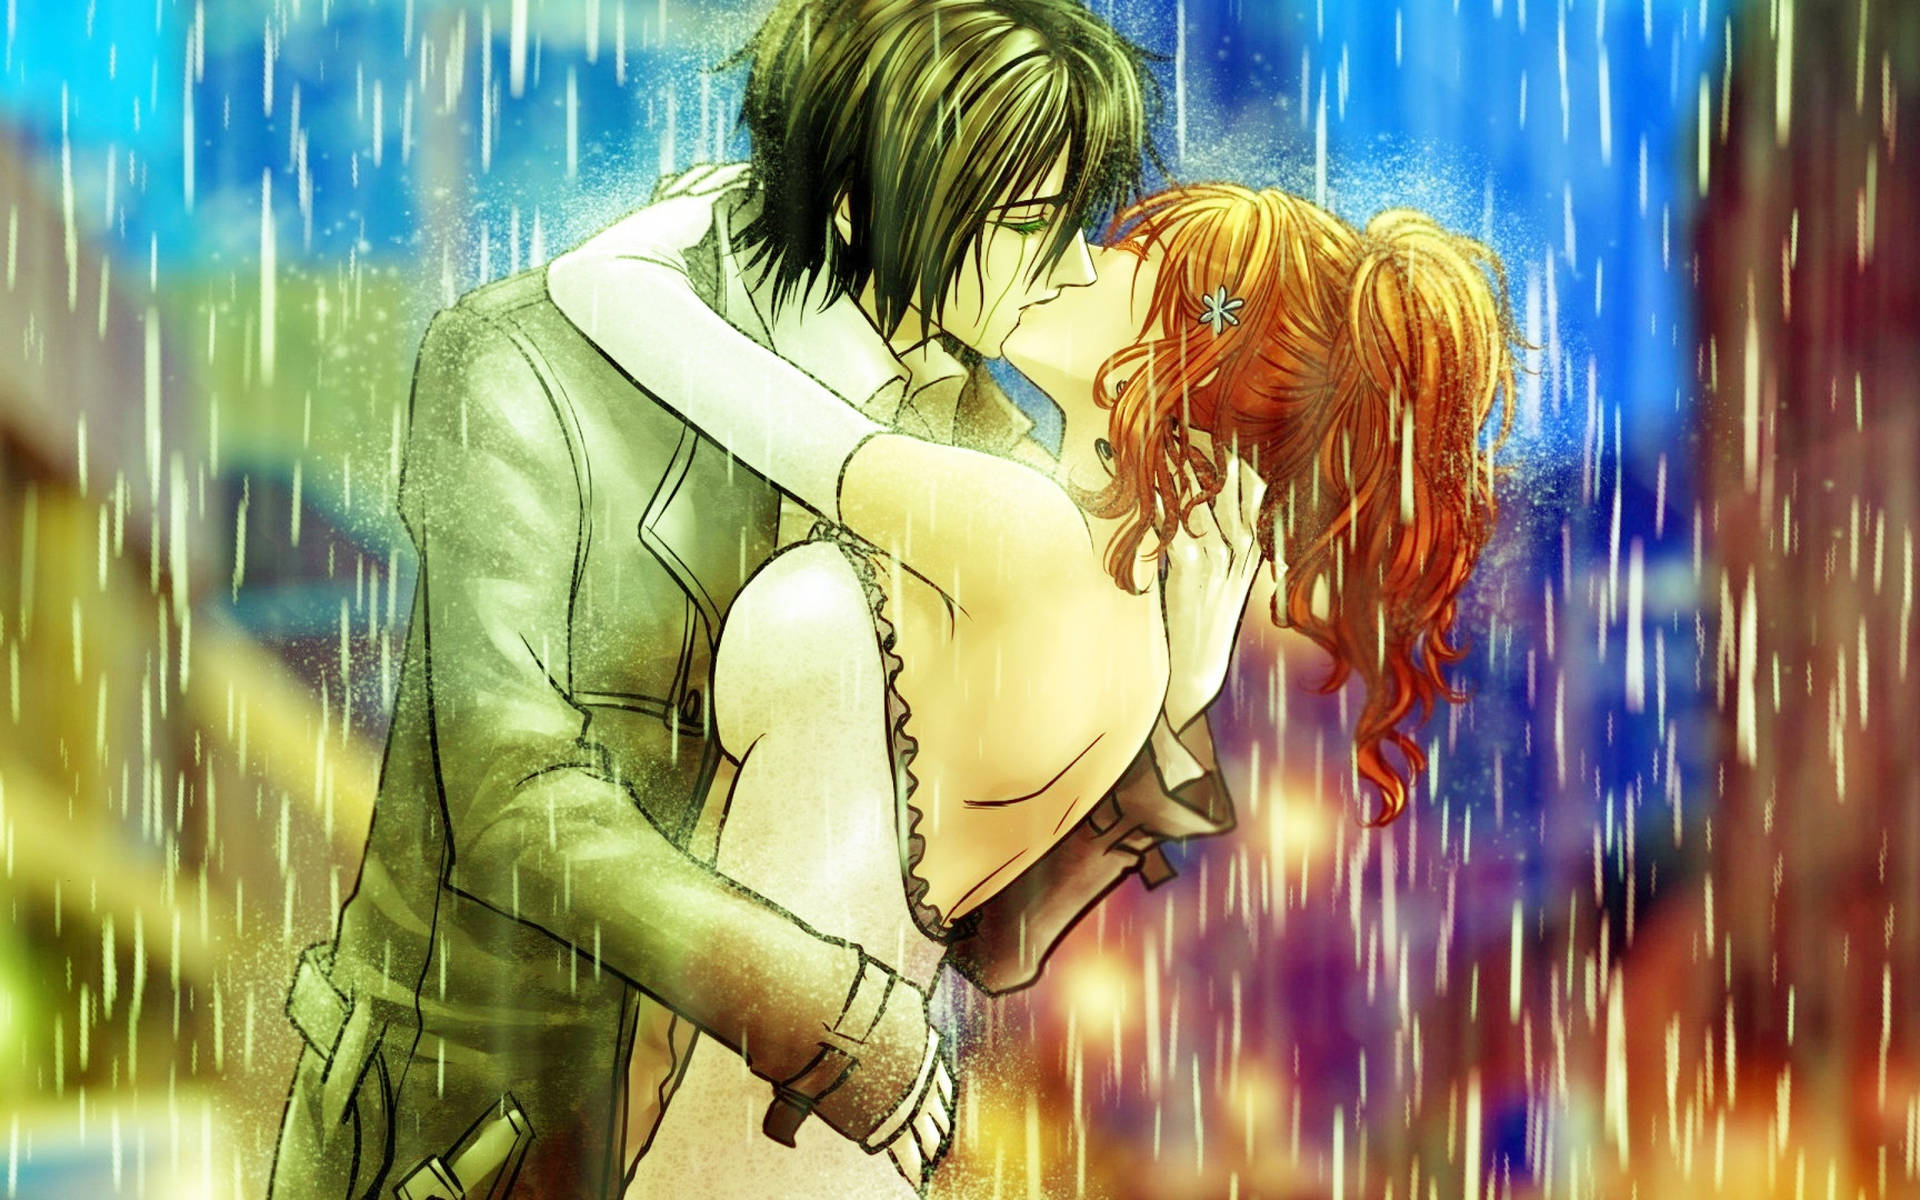 Anime Couple Kiss Under The Rain Wallpaper